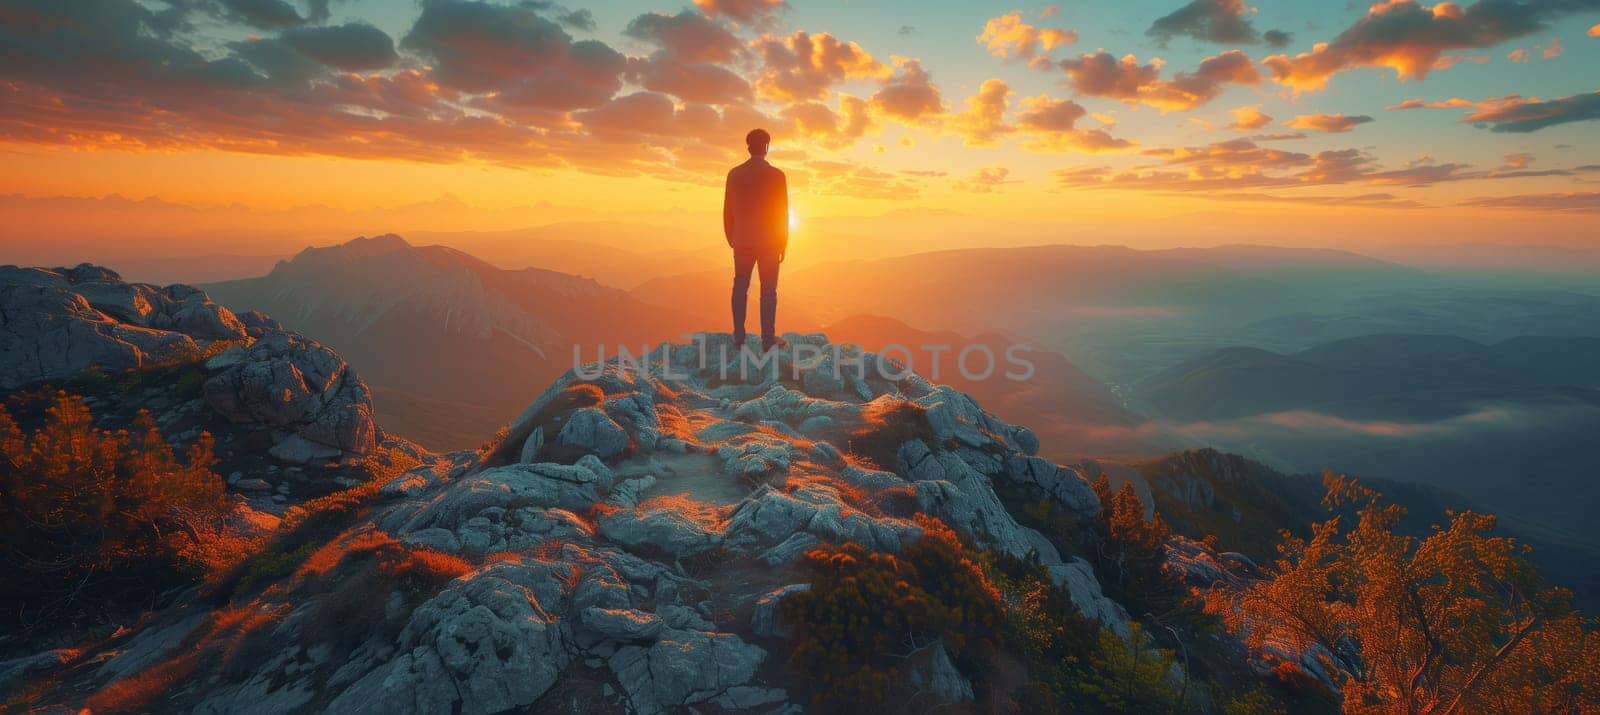 Man atop mountain at sunset enjoying natural landscape by richwolf